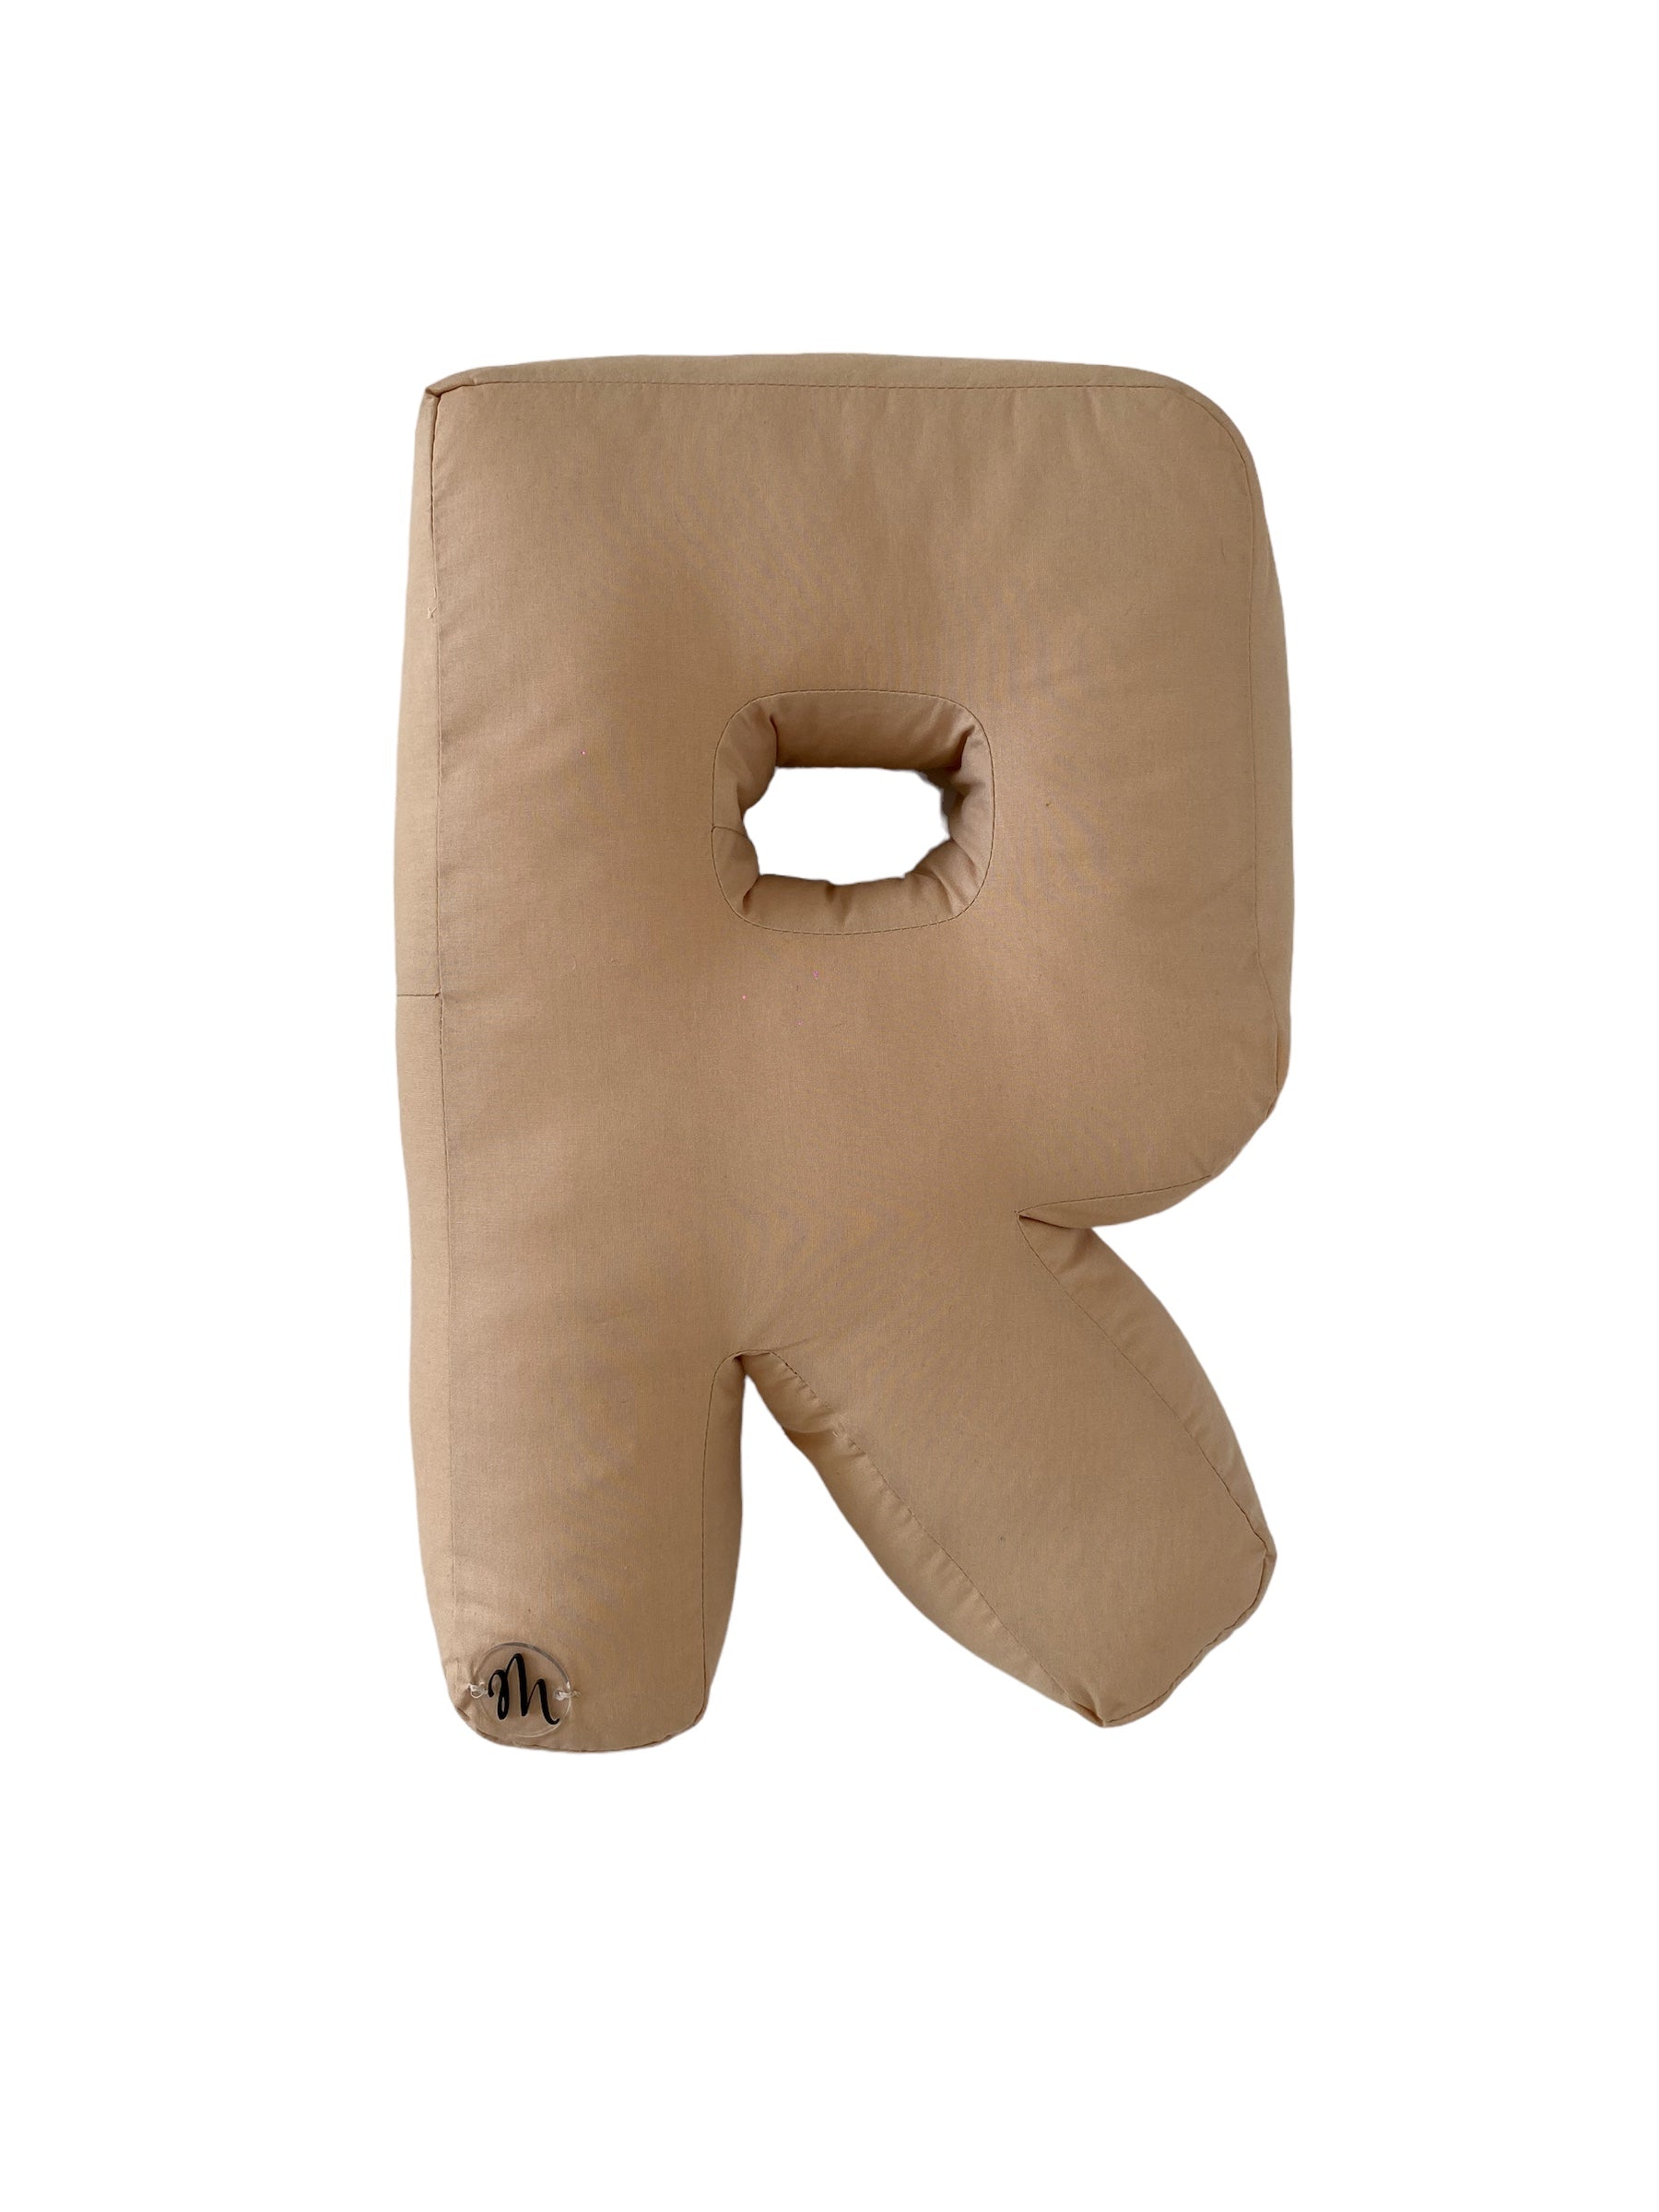 Handmade letter cushion